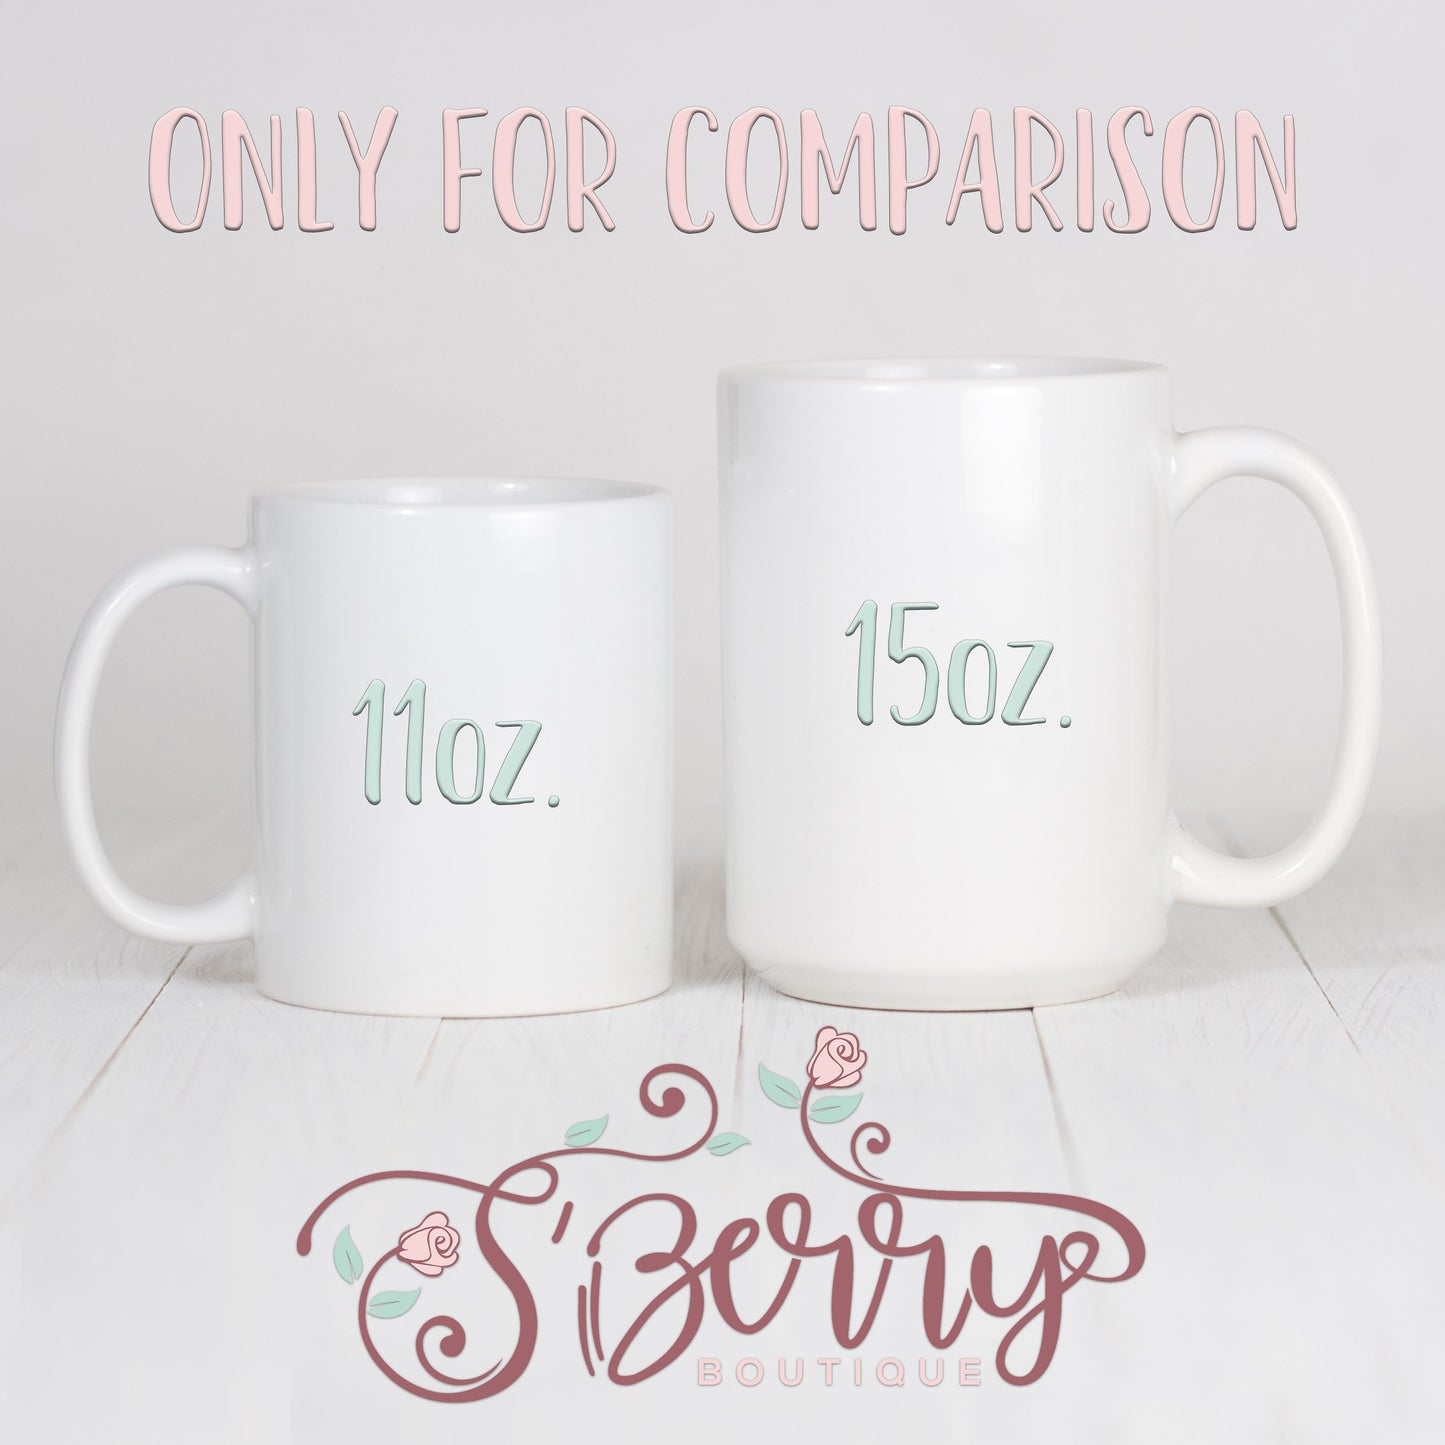 11 oz and 15 oz Mug Comparison